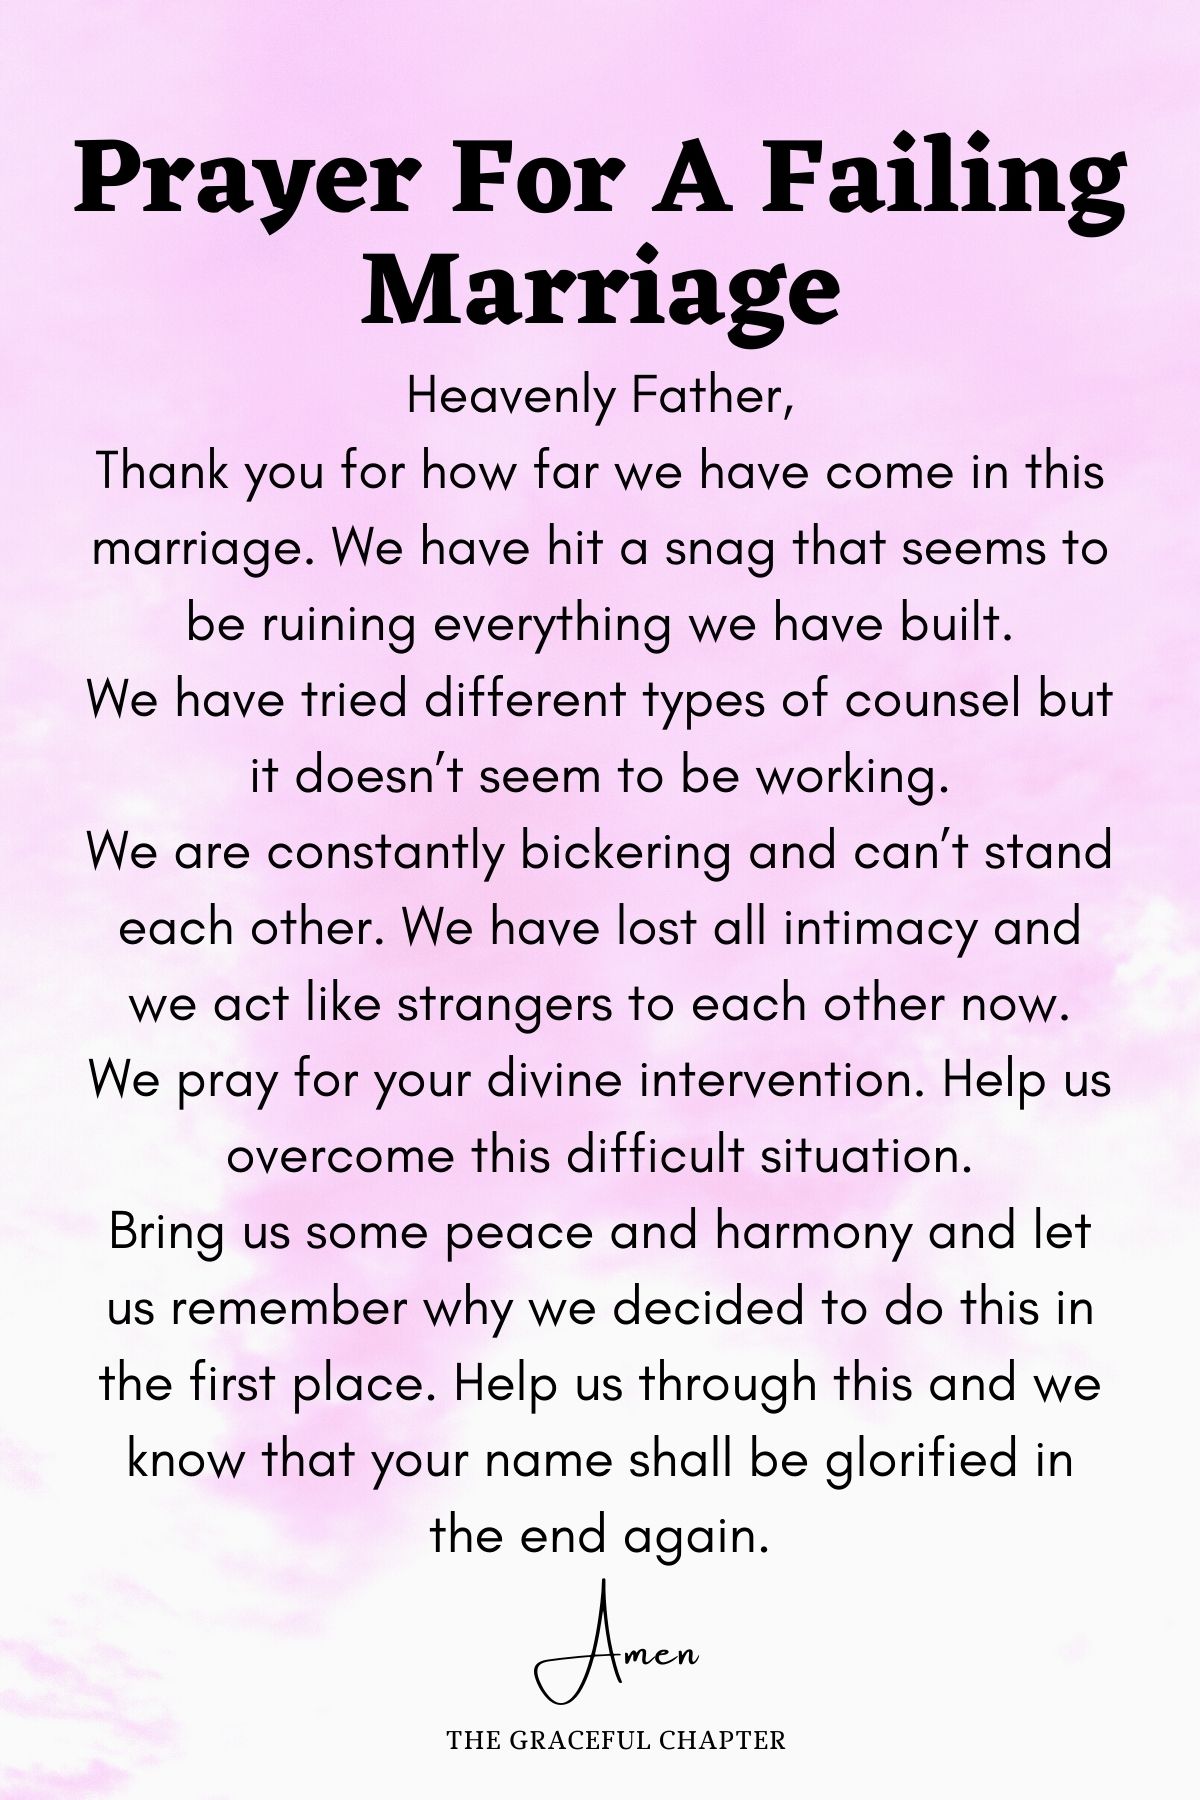 Prayer for a failing marriage